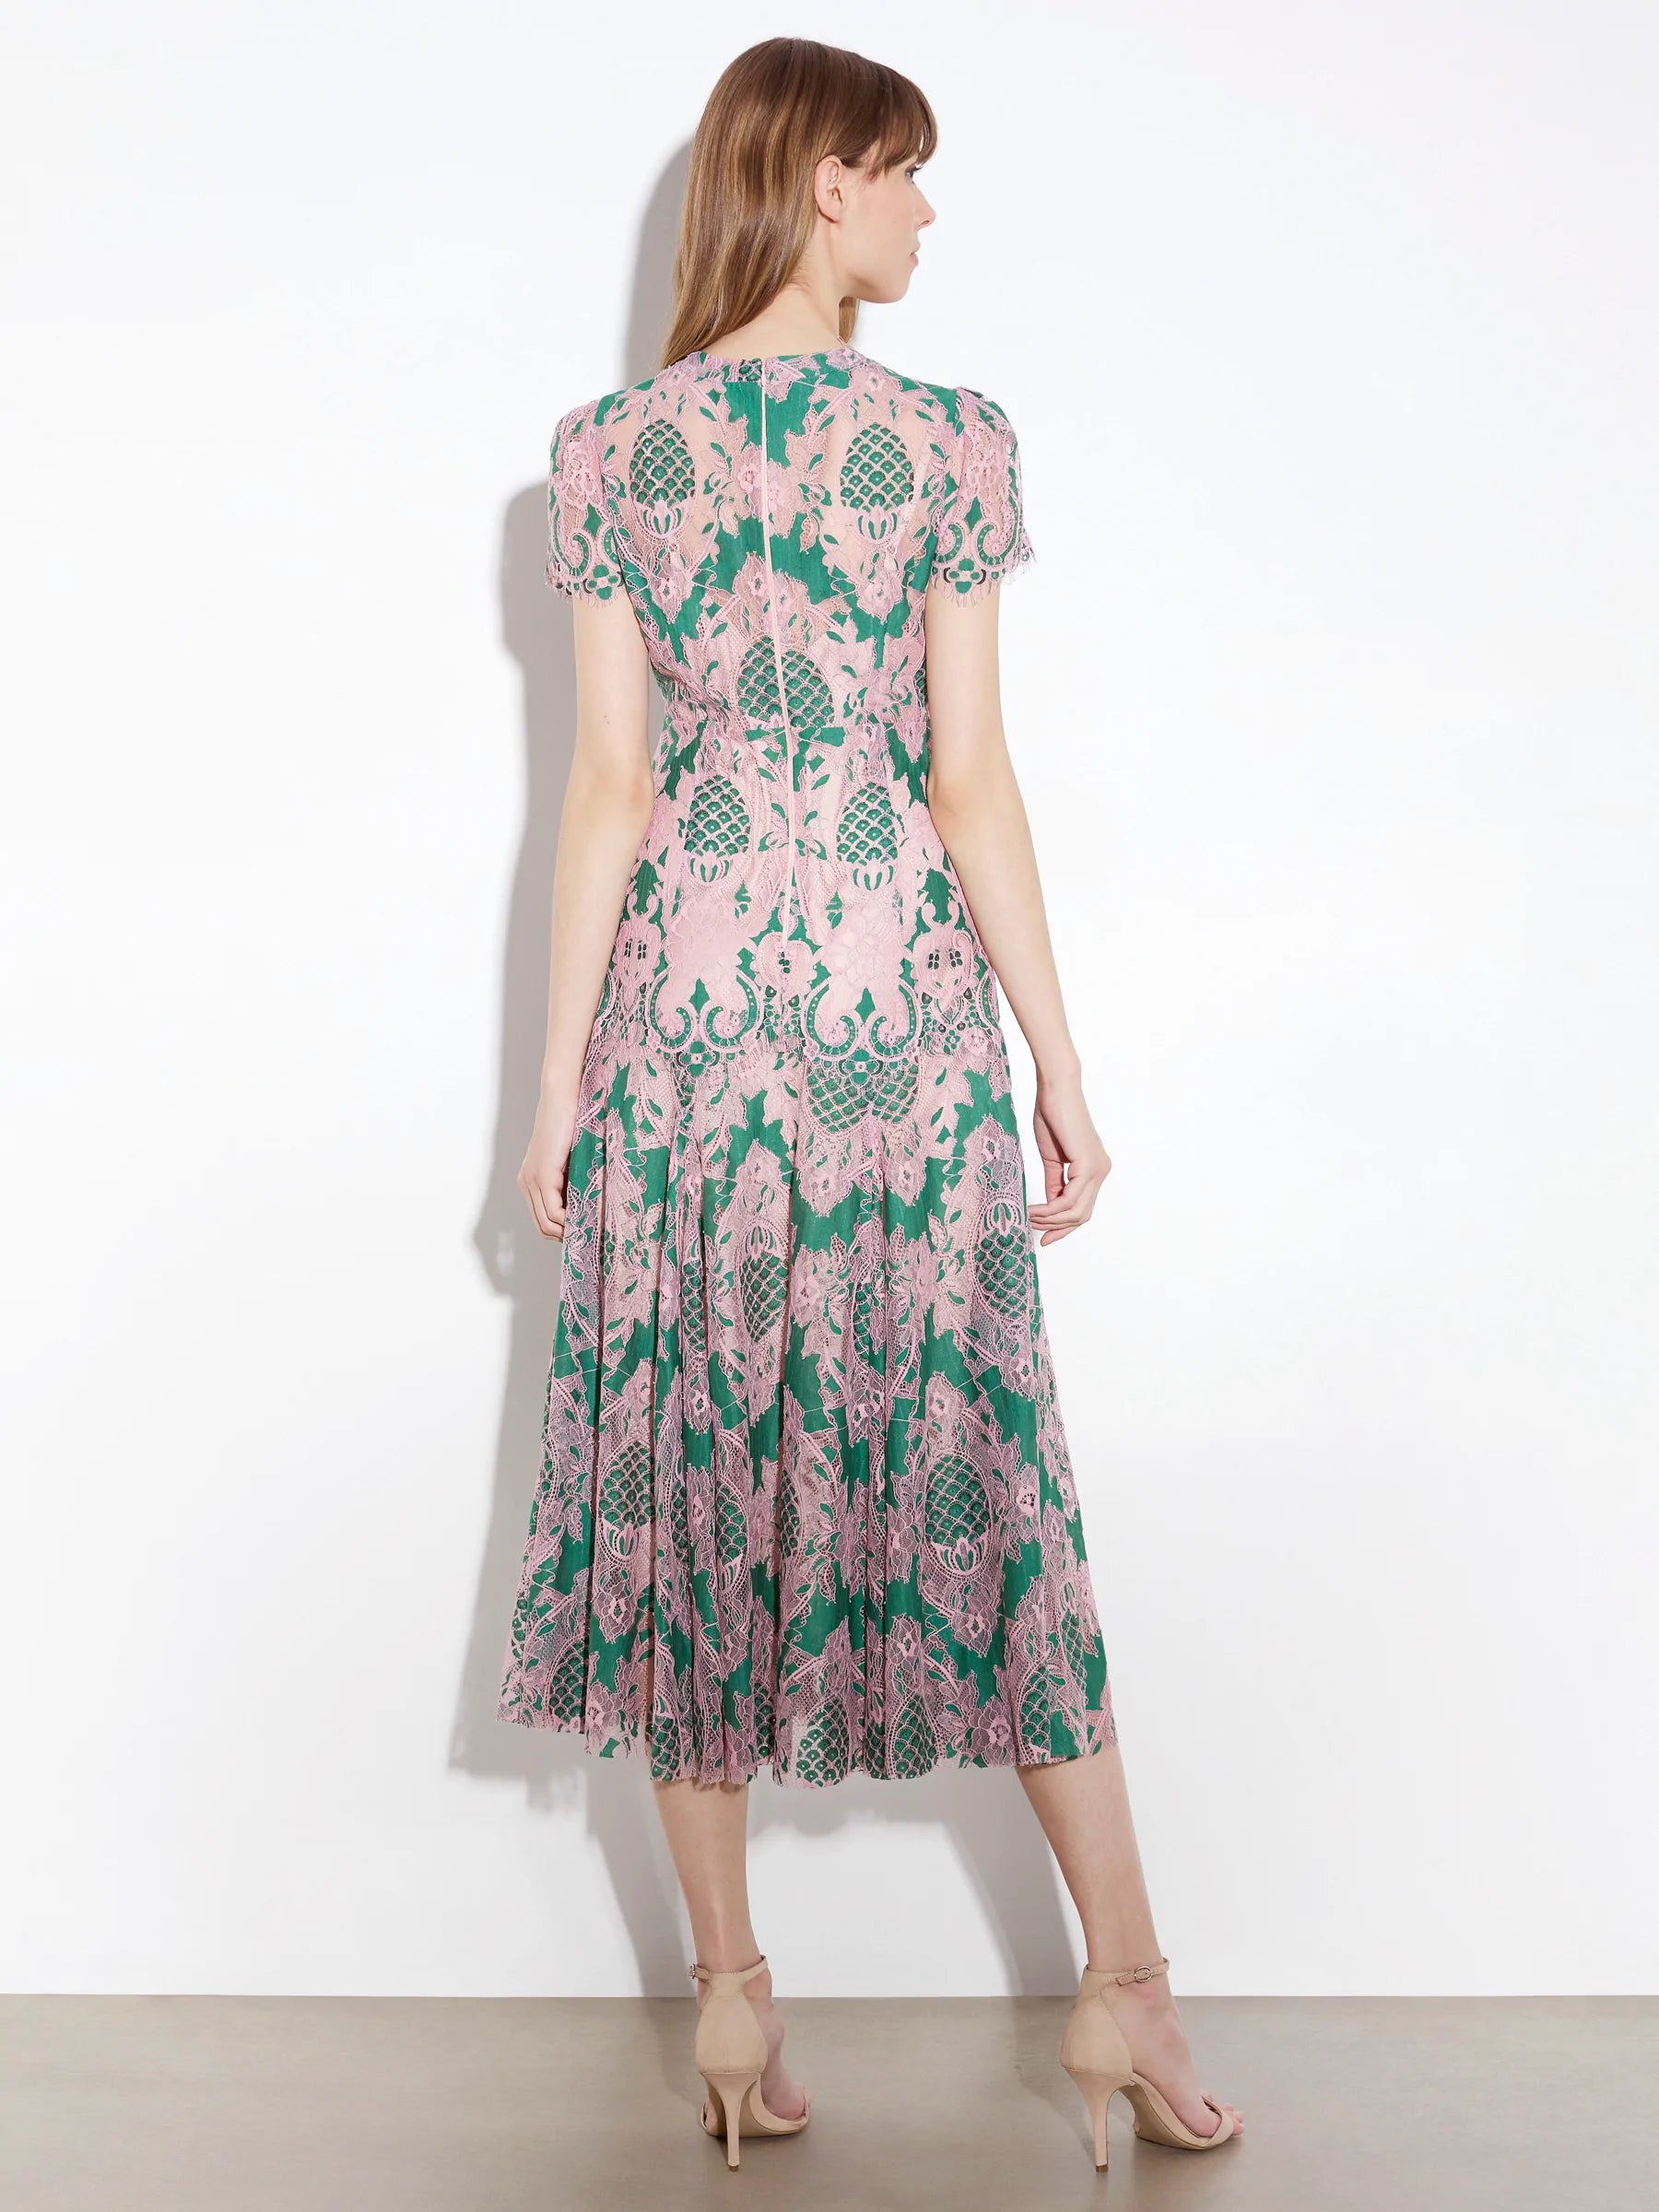 Moss& Spy Sienna Cap Sleeve Dress - Pink/Emerald